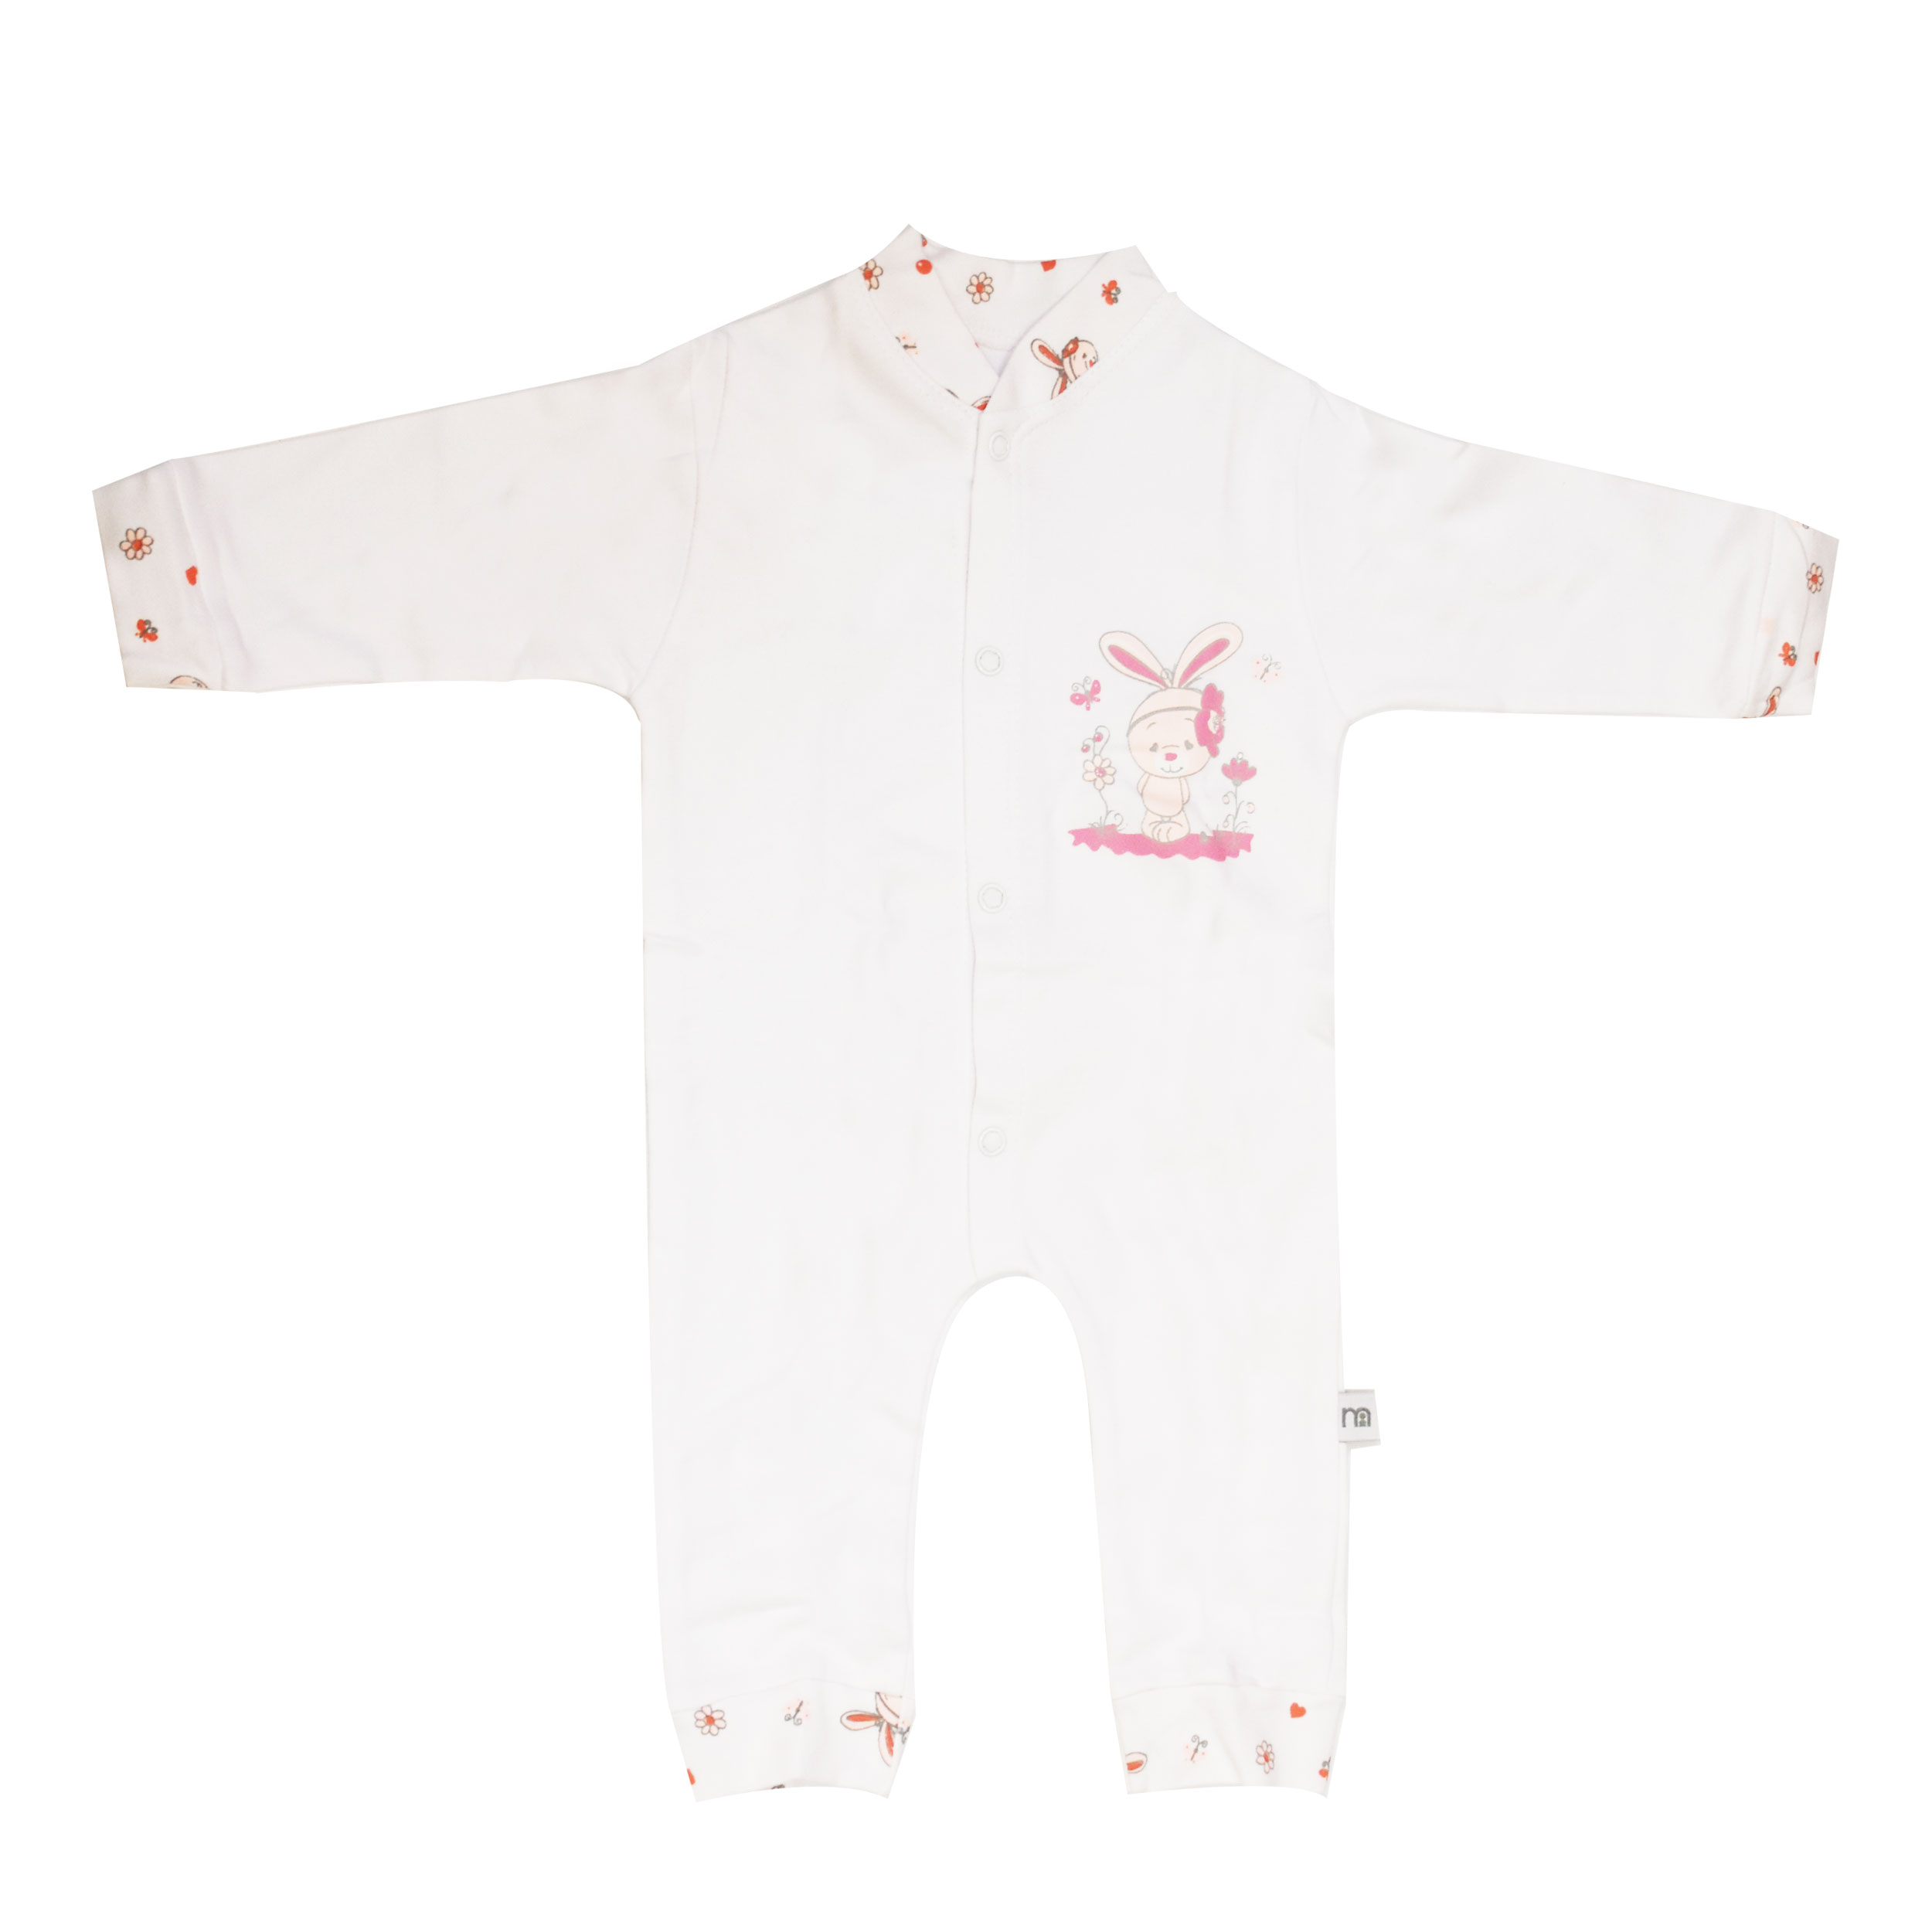 ست 7 تکه لباس نوزادی مادرکر طرح خرگوش کد M454.21 -  - 8